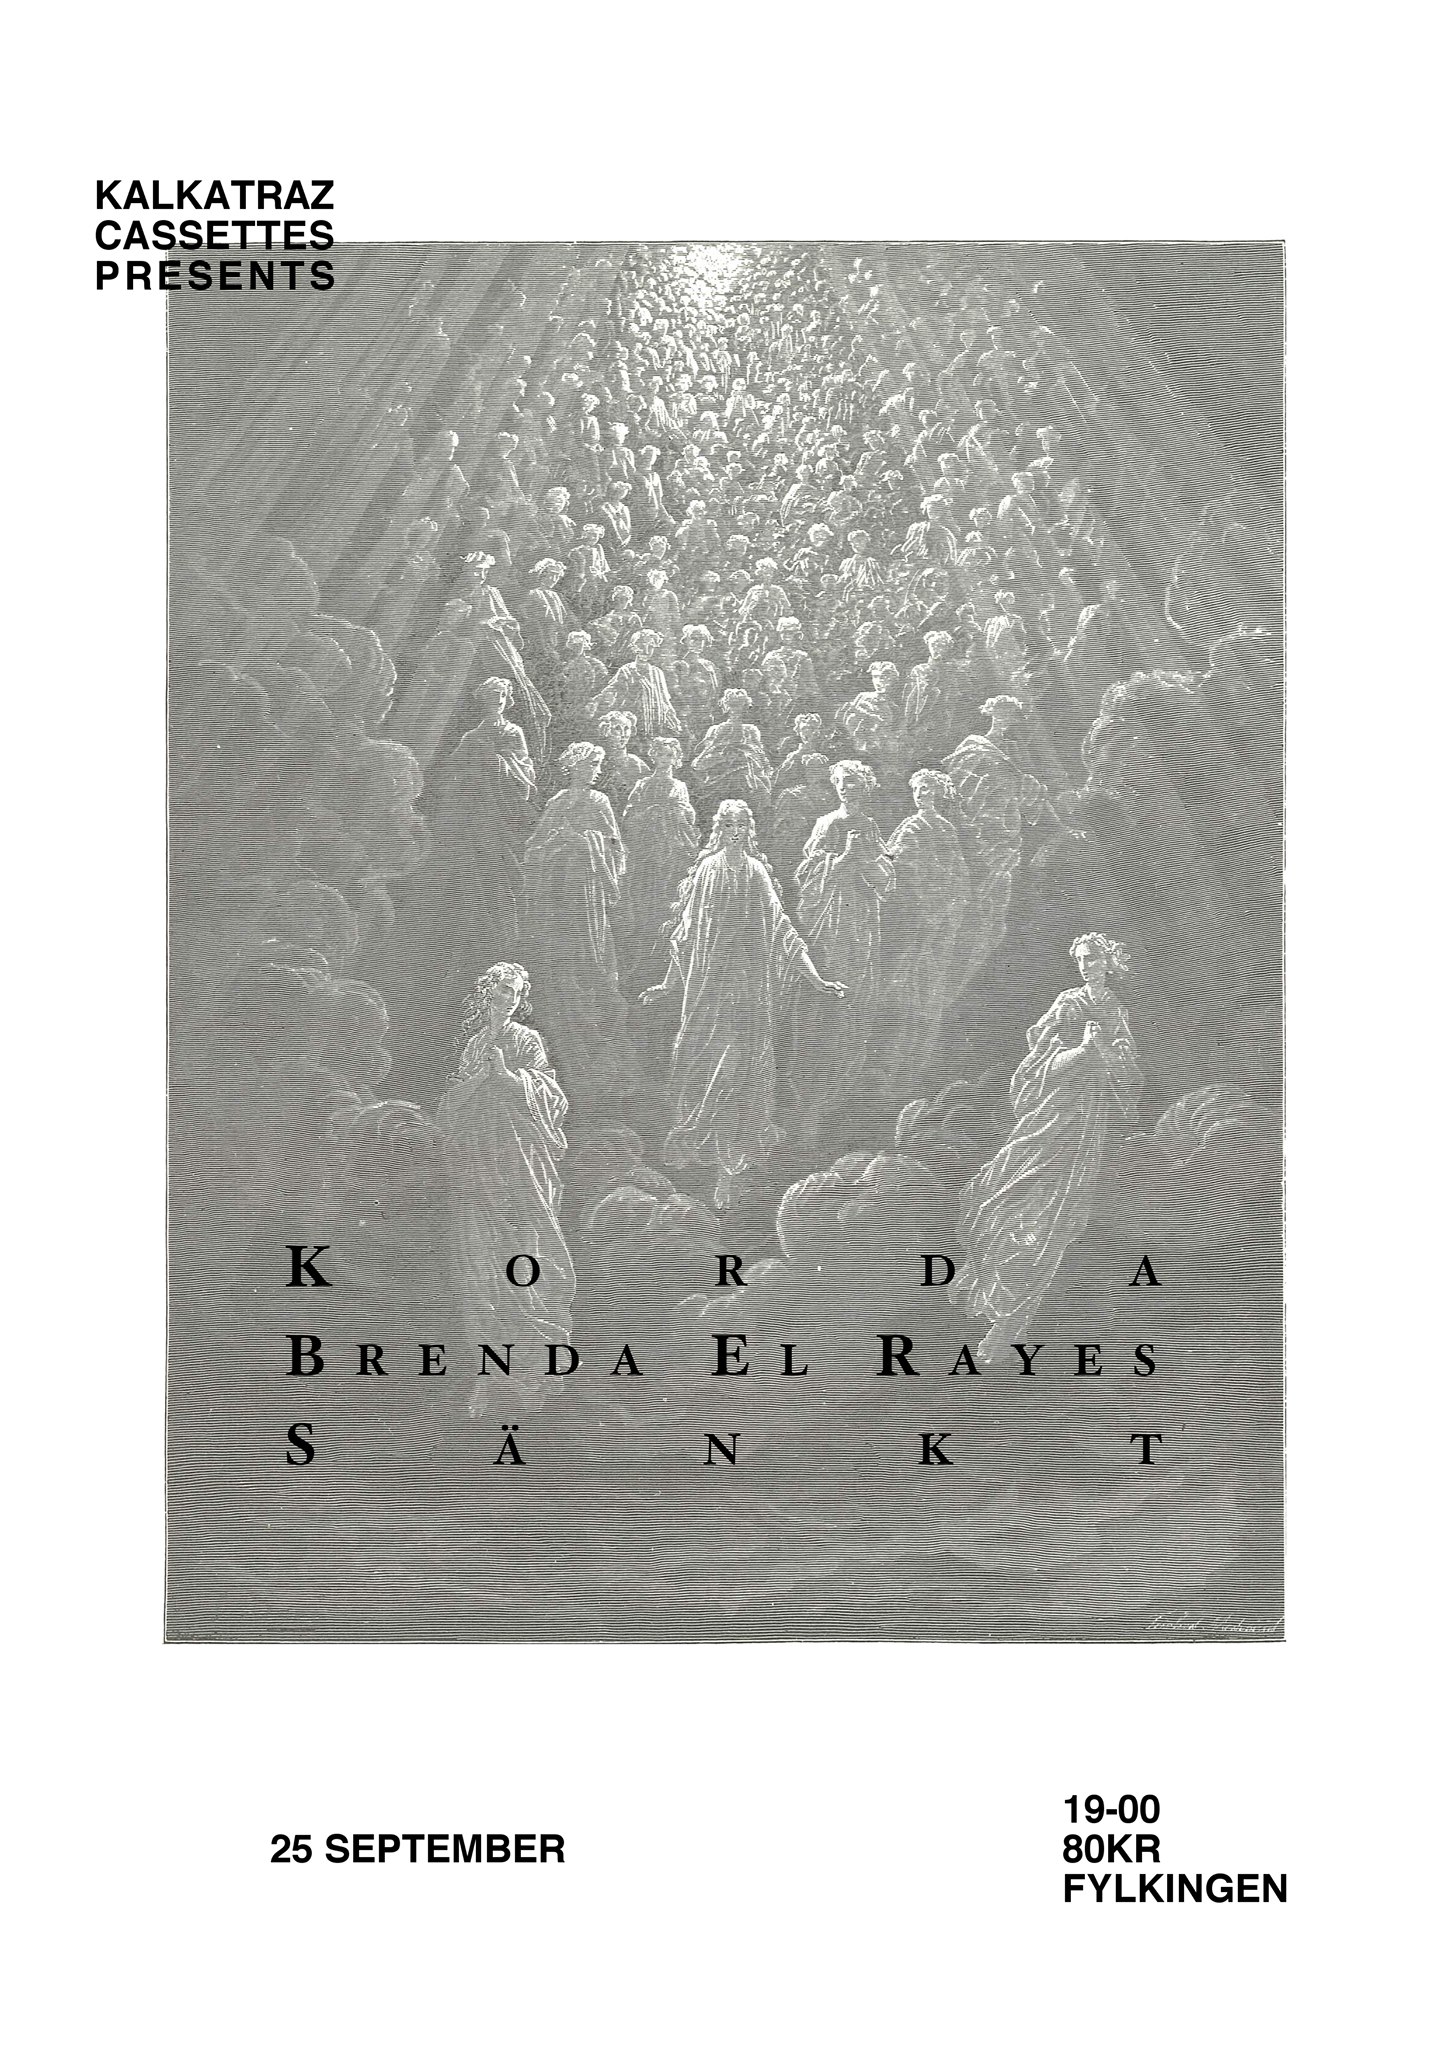 Poster for Kalkatraz Presents Korda Event